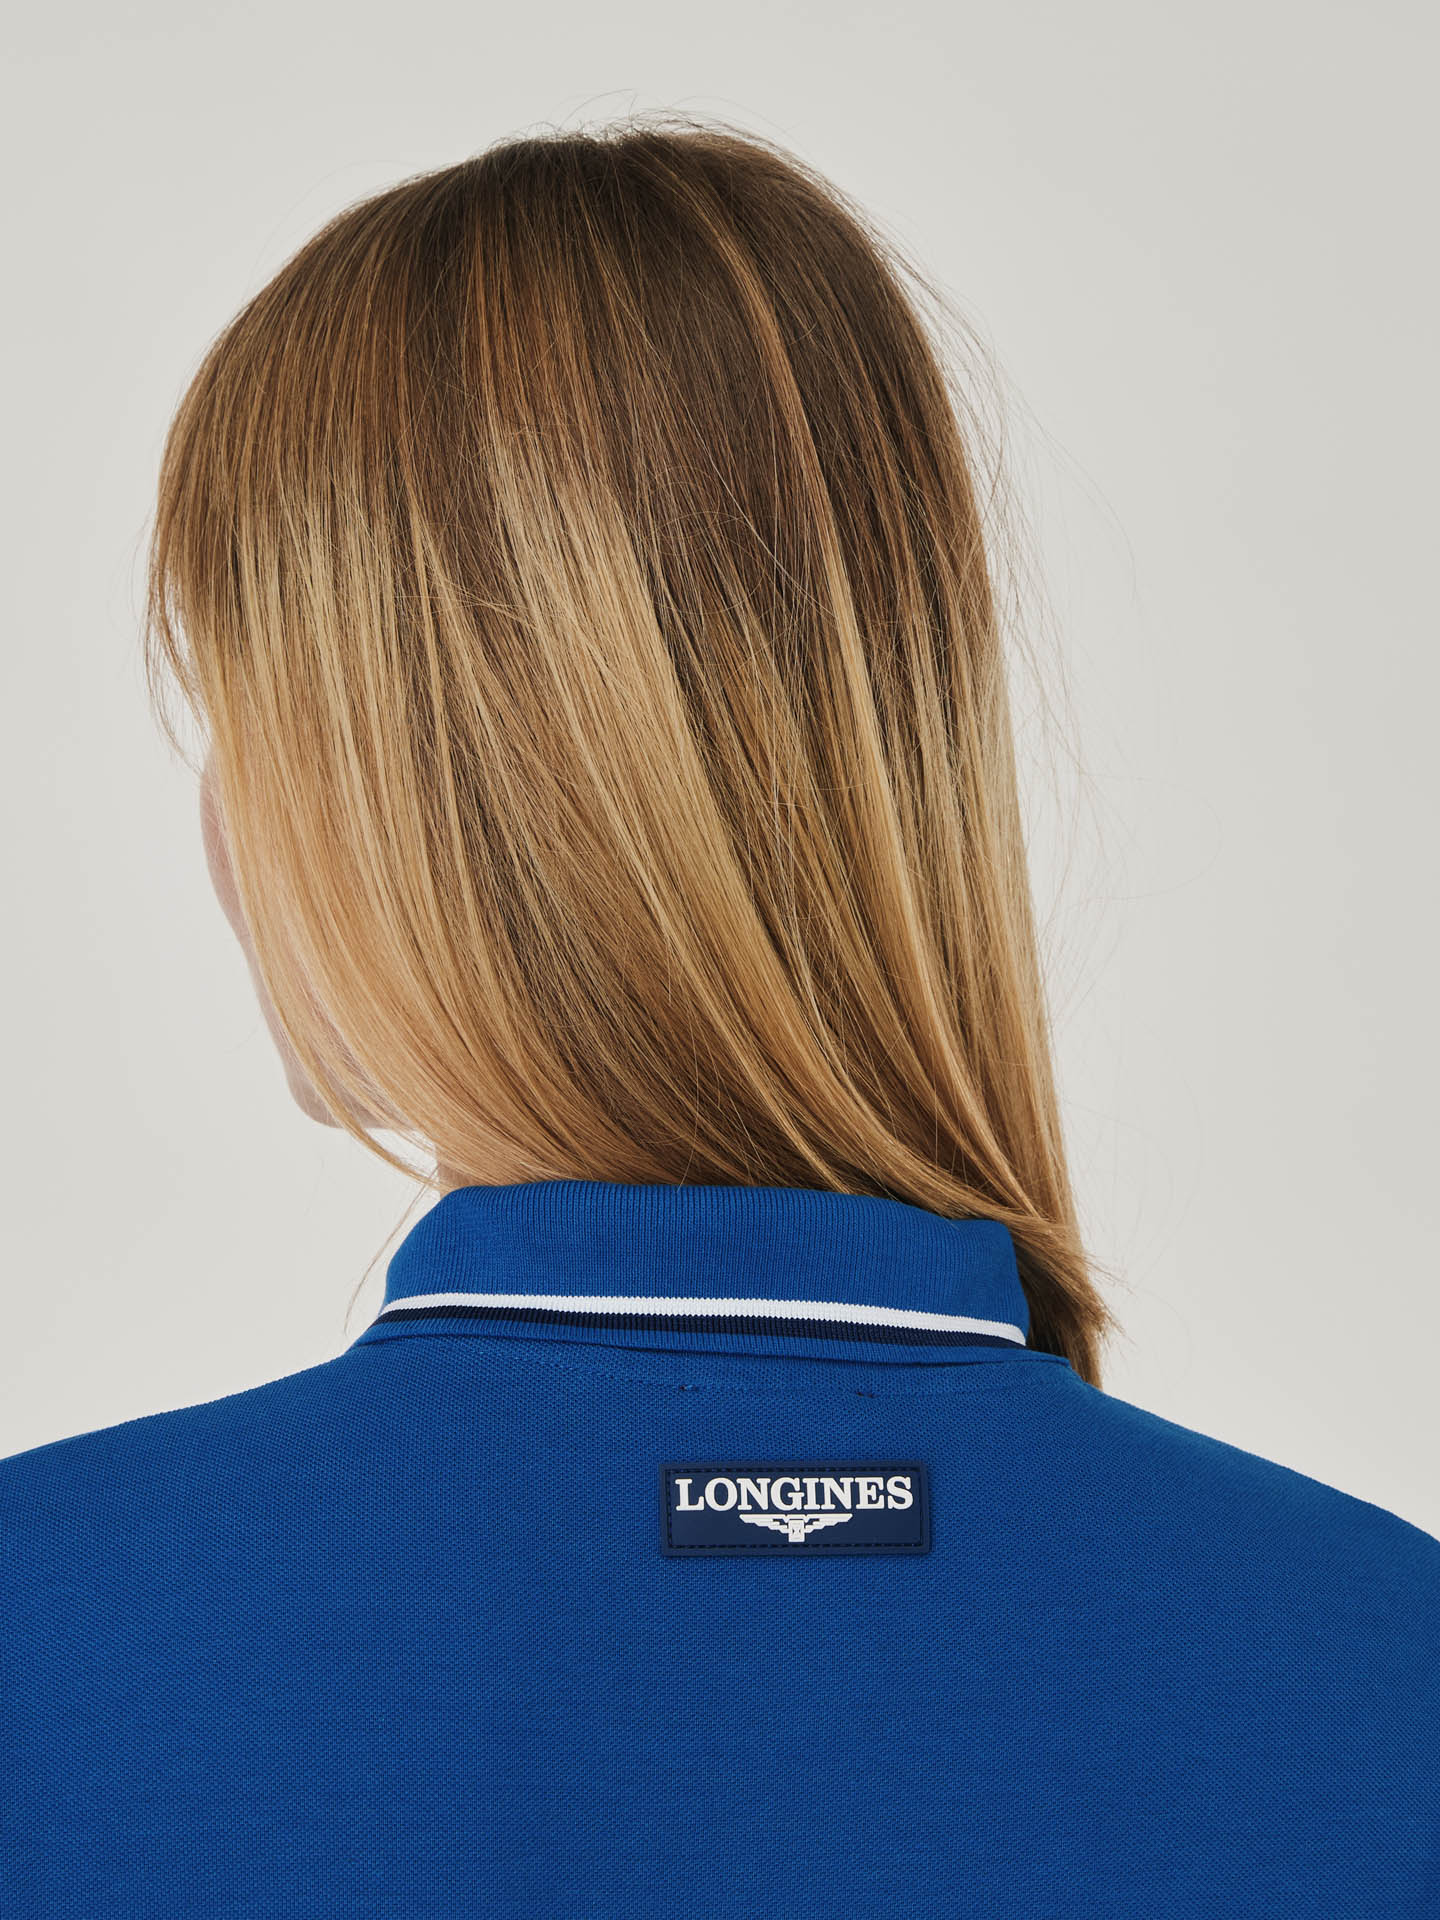 LGCT Premium Unisex Polo-shirt #2 Royal Blue